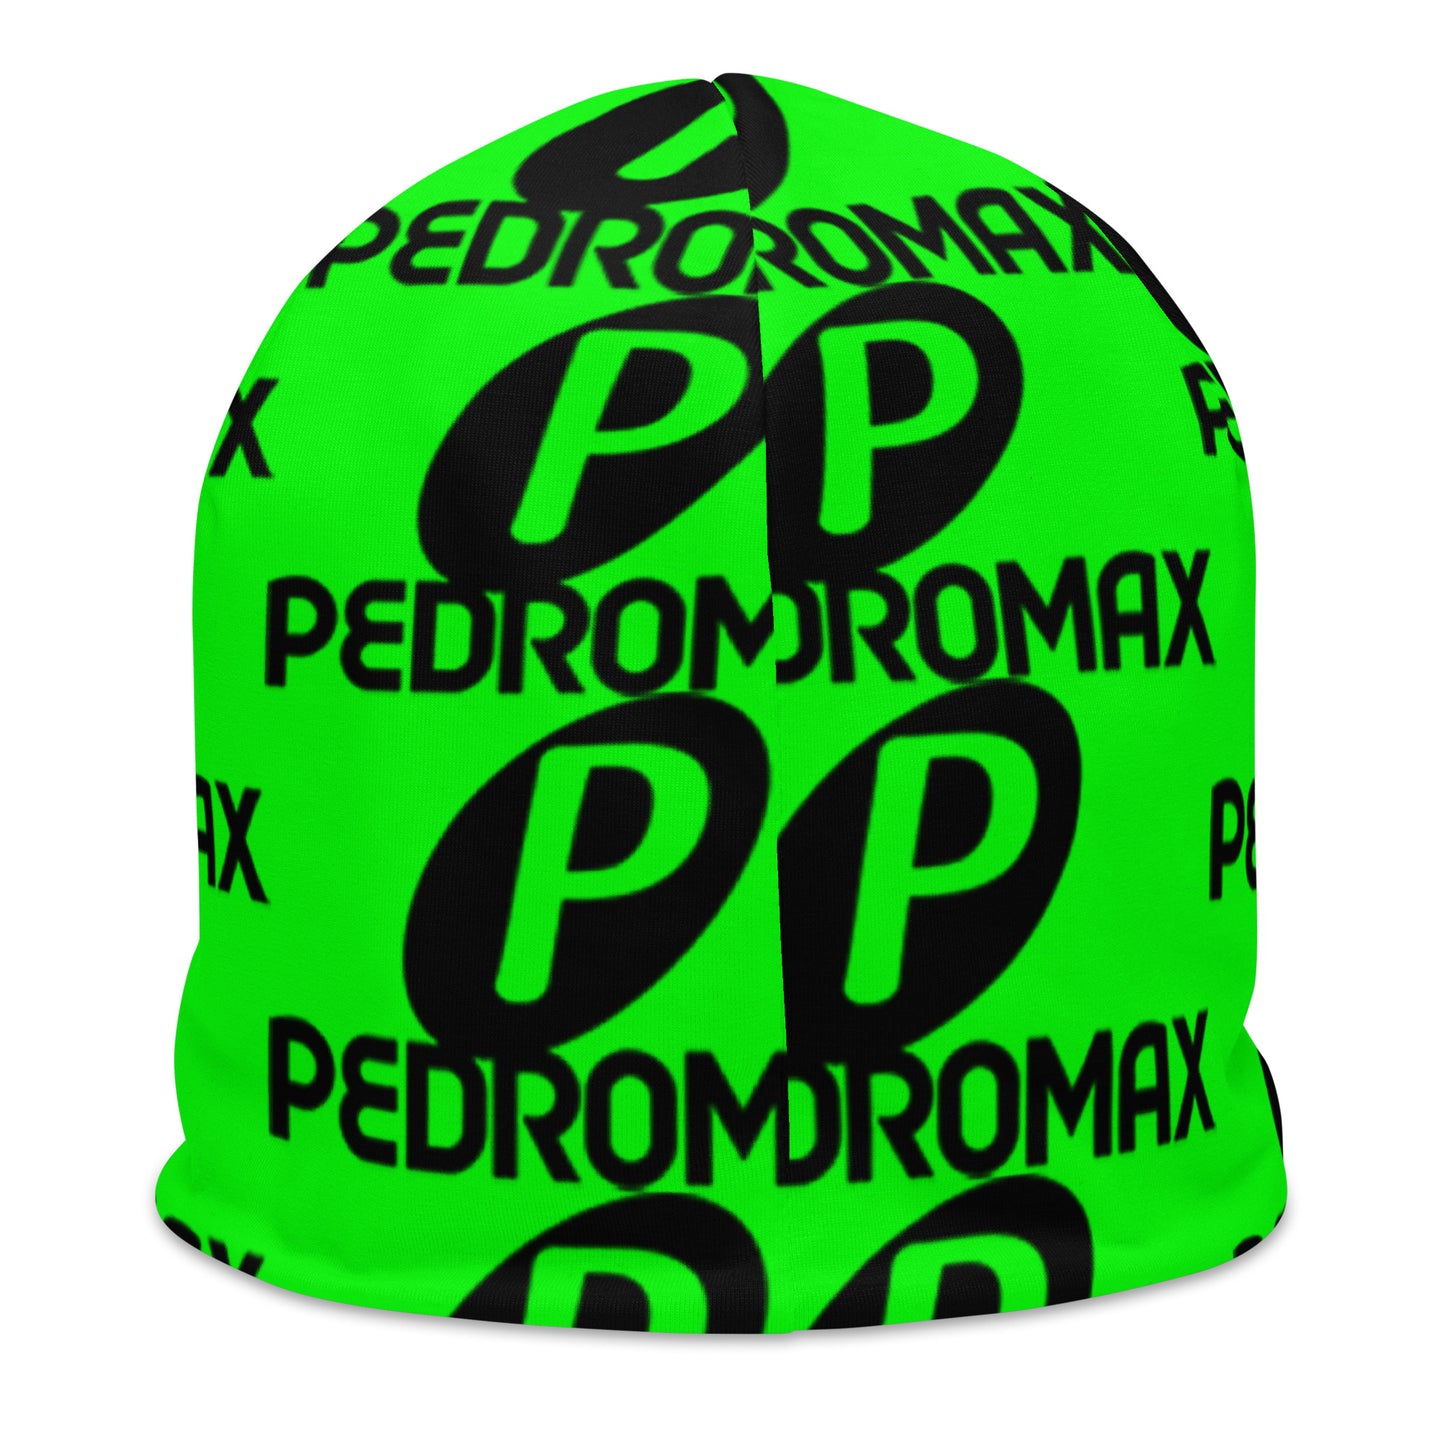 Bonnet Pedromax